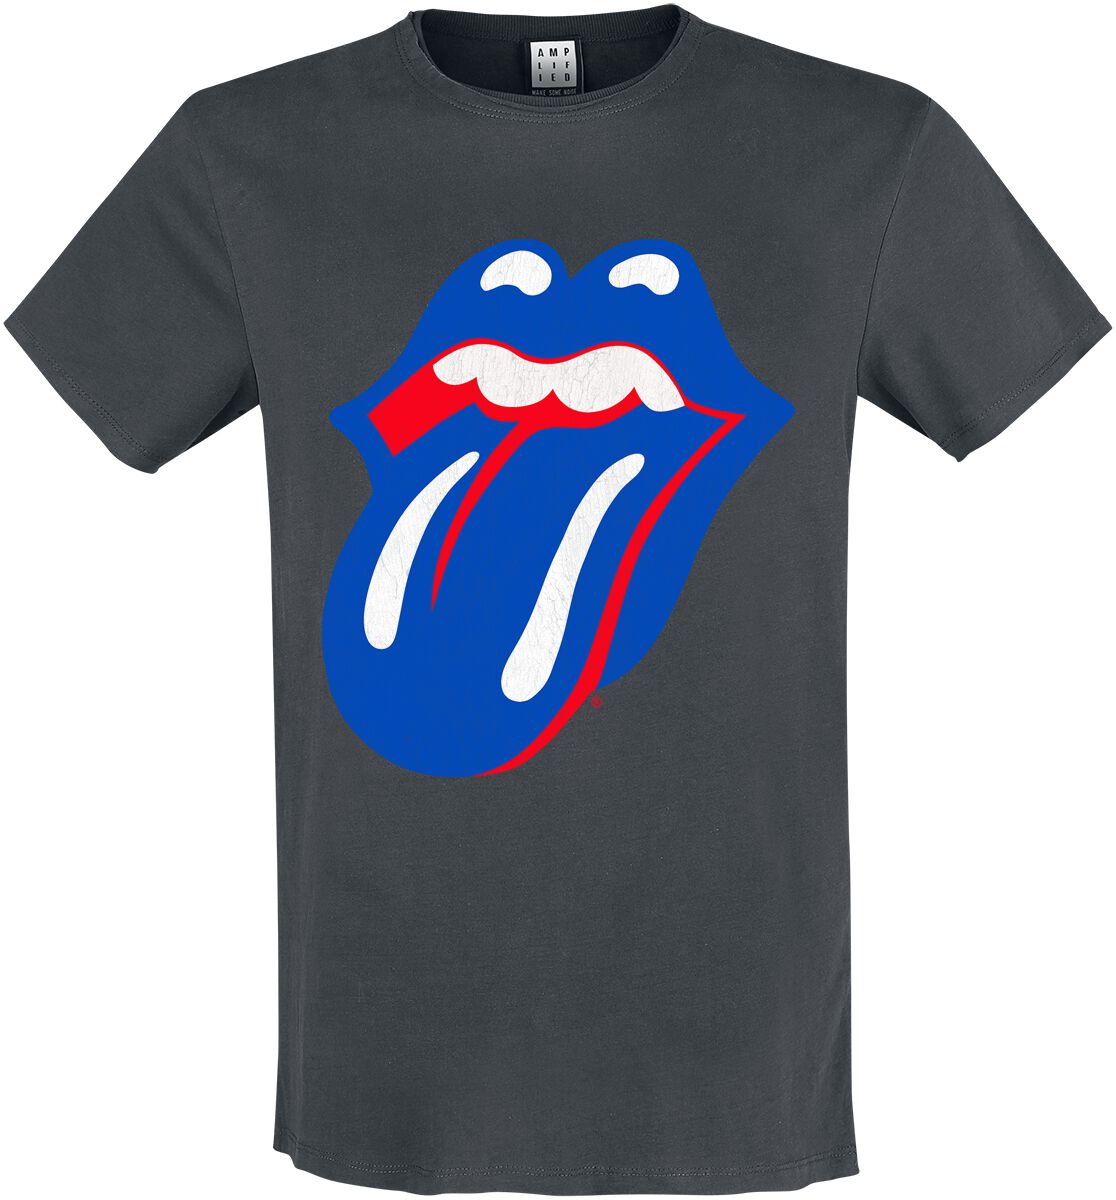 The Rolling Stones T-Shirt - Amplified Collection - Blue & Lonesome - S bis L - für Männer - Größe S - charcoal  - Lizenziertes Merchandise!